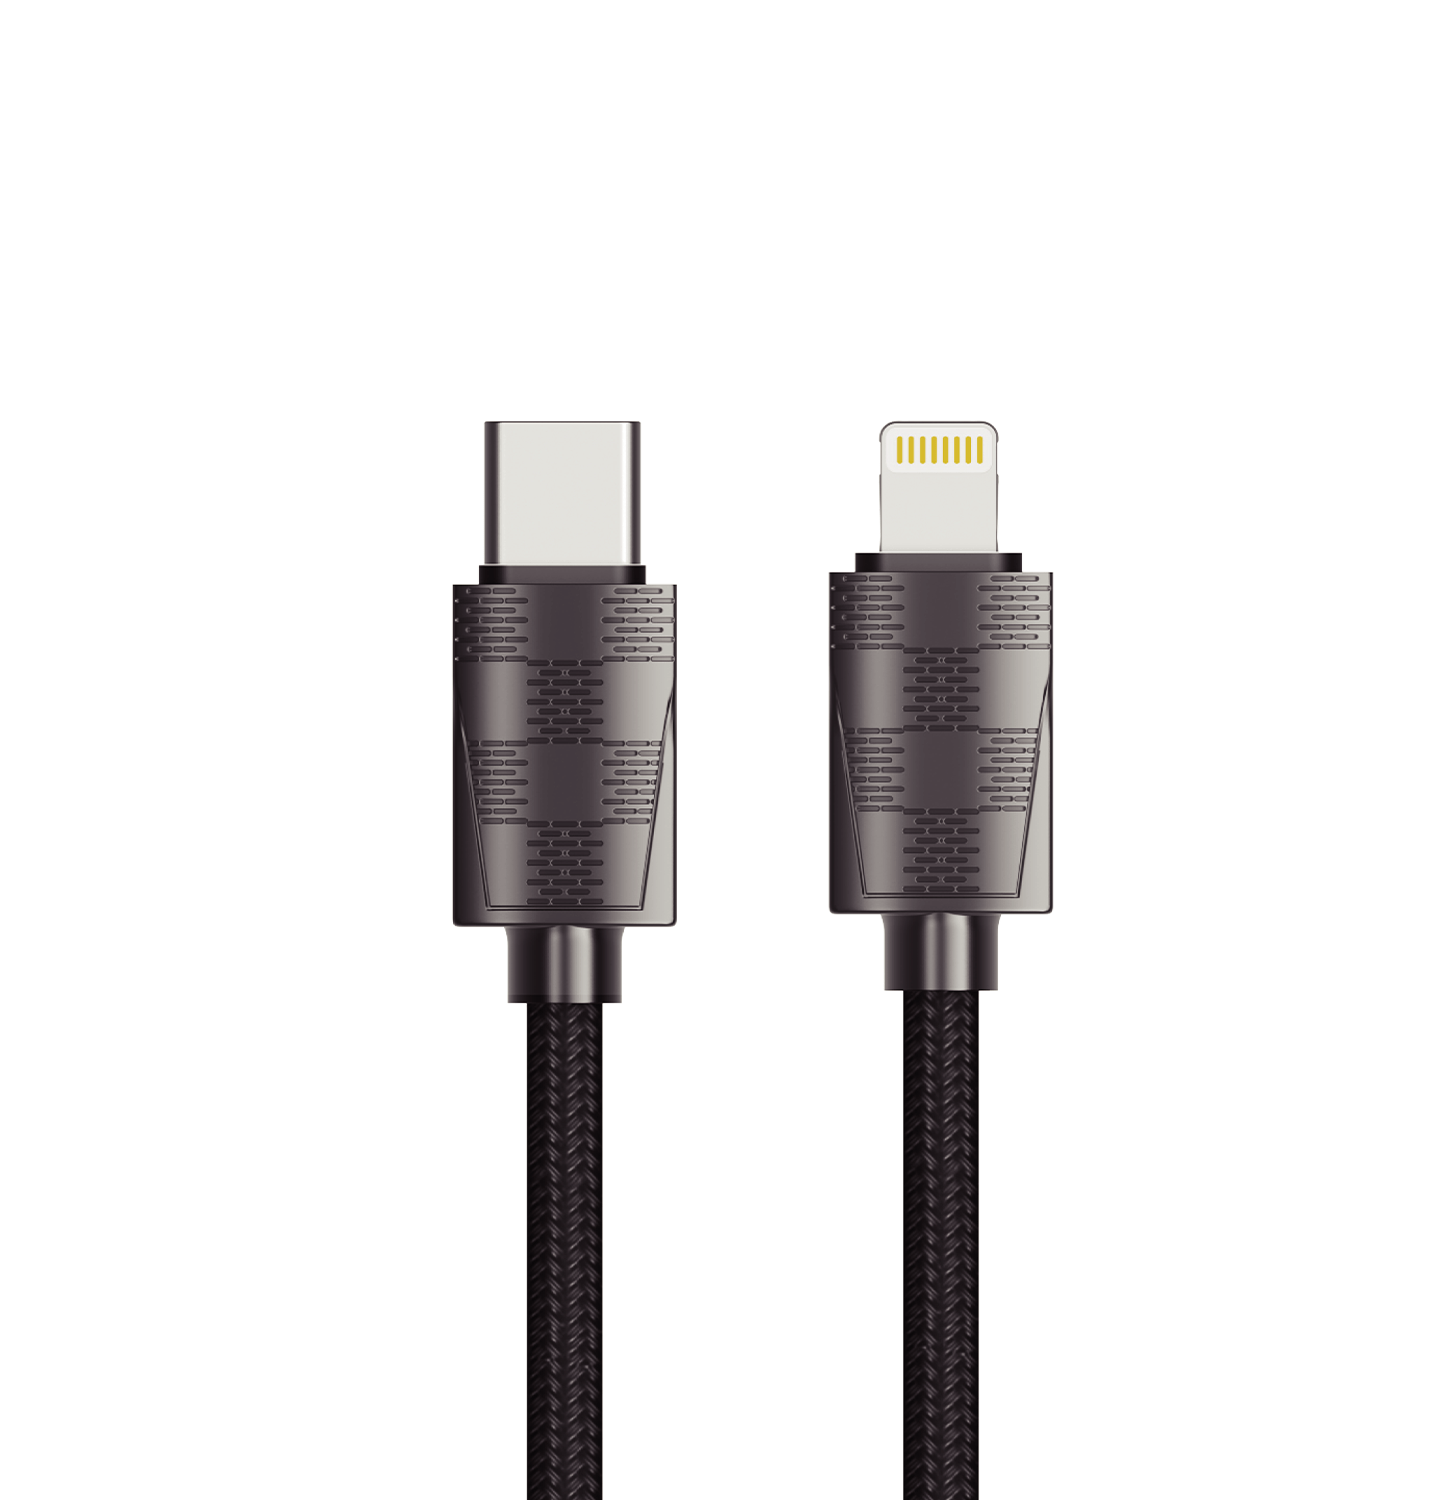 DC288 TPC-I5 iPhone charging cables 30W aido tech EZRA